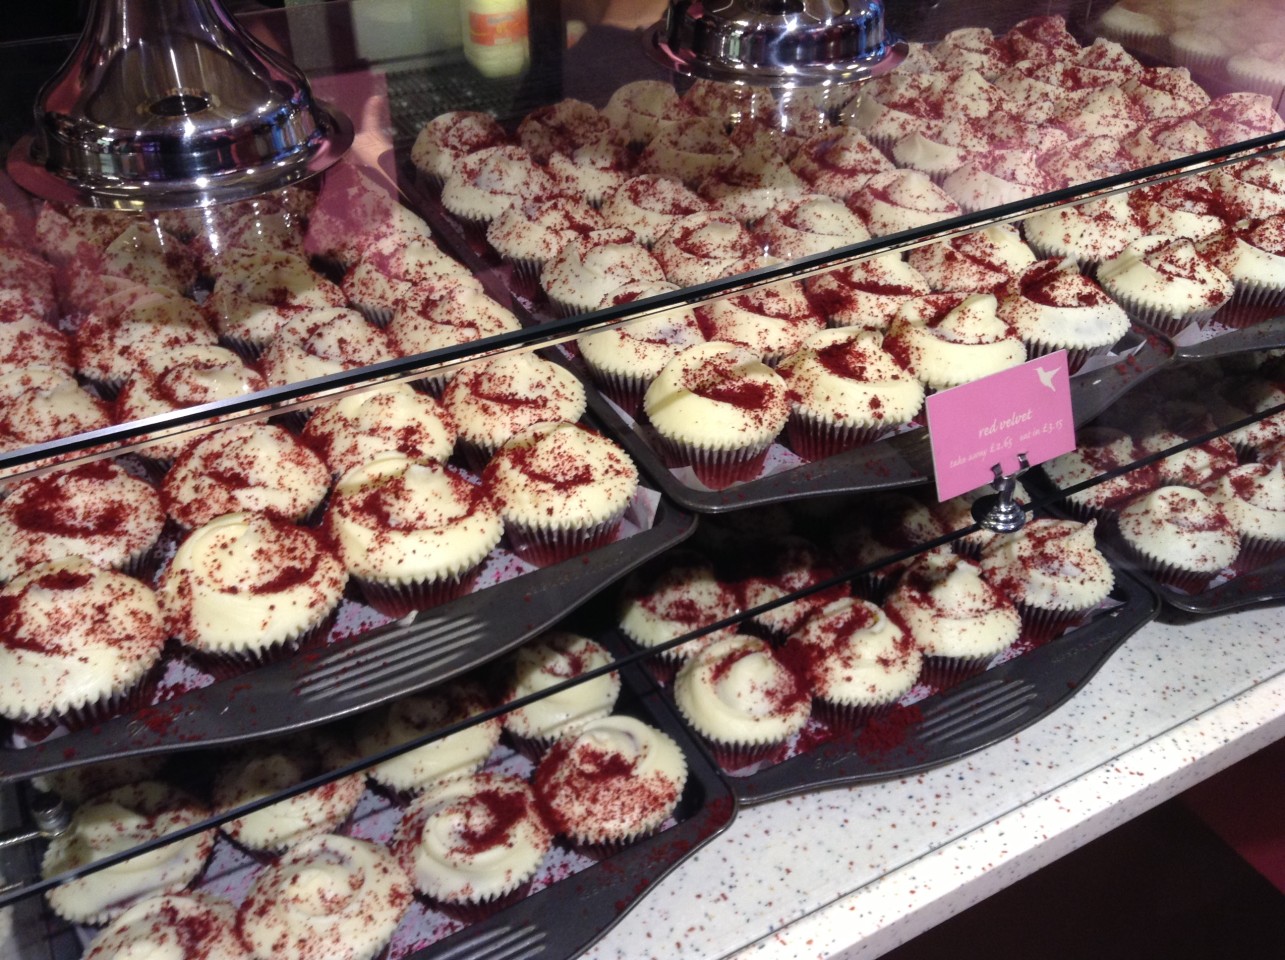 Red Velvet cupcakes at Hummingbird Bakery in London